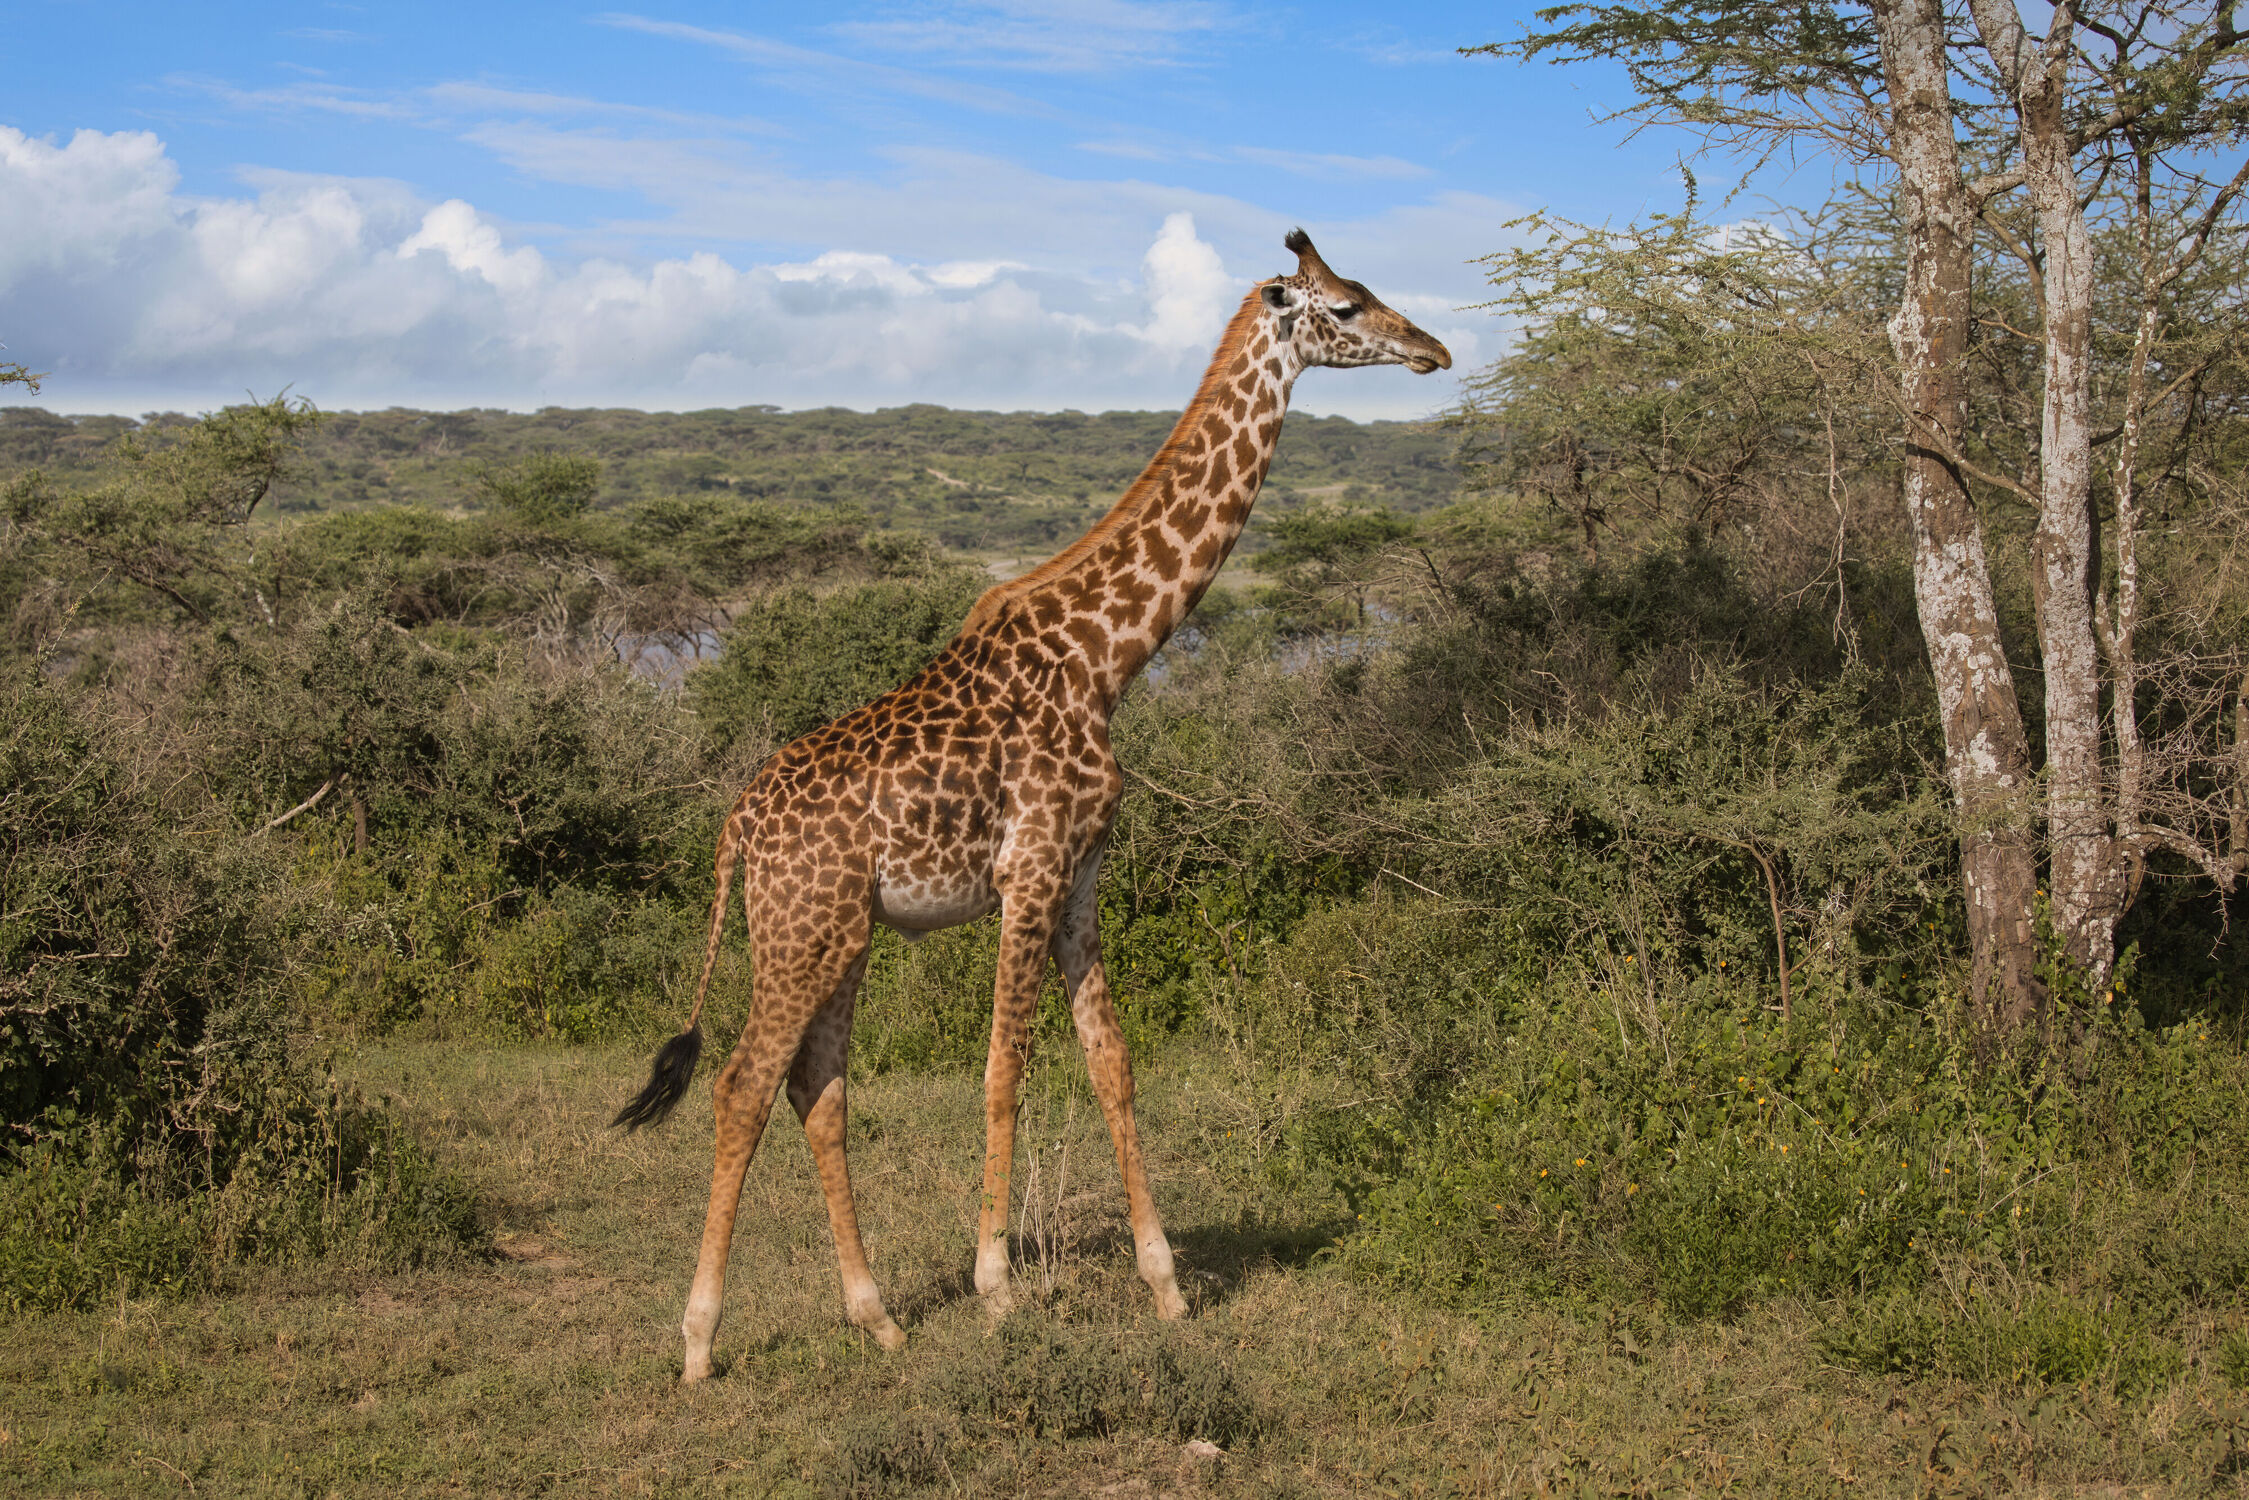 Bild mit Tiere, Giraffen, Giraffe, Afrika, safari, tanzania, Großwild, Tierbeobachtung